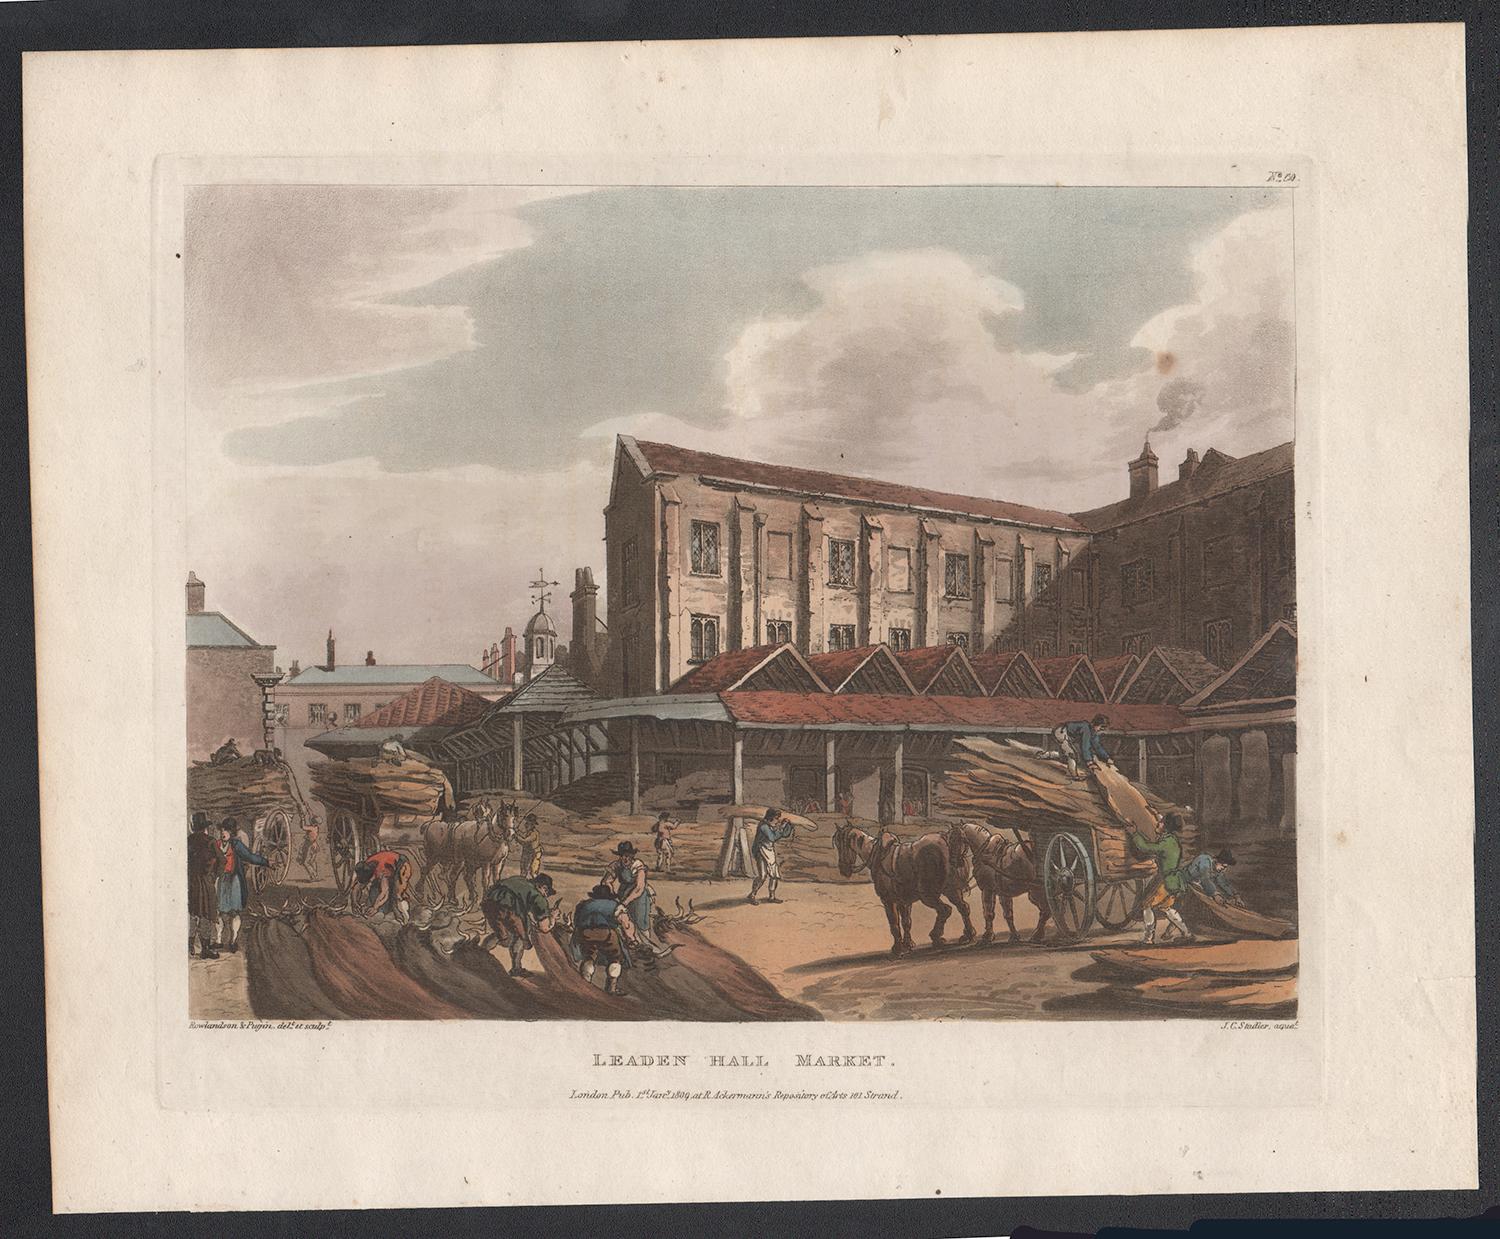 Leaden Hall Market, London, Farbe Aquatinta, 1809, nach Thomas Rowlandson – Print von Unknown